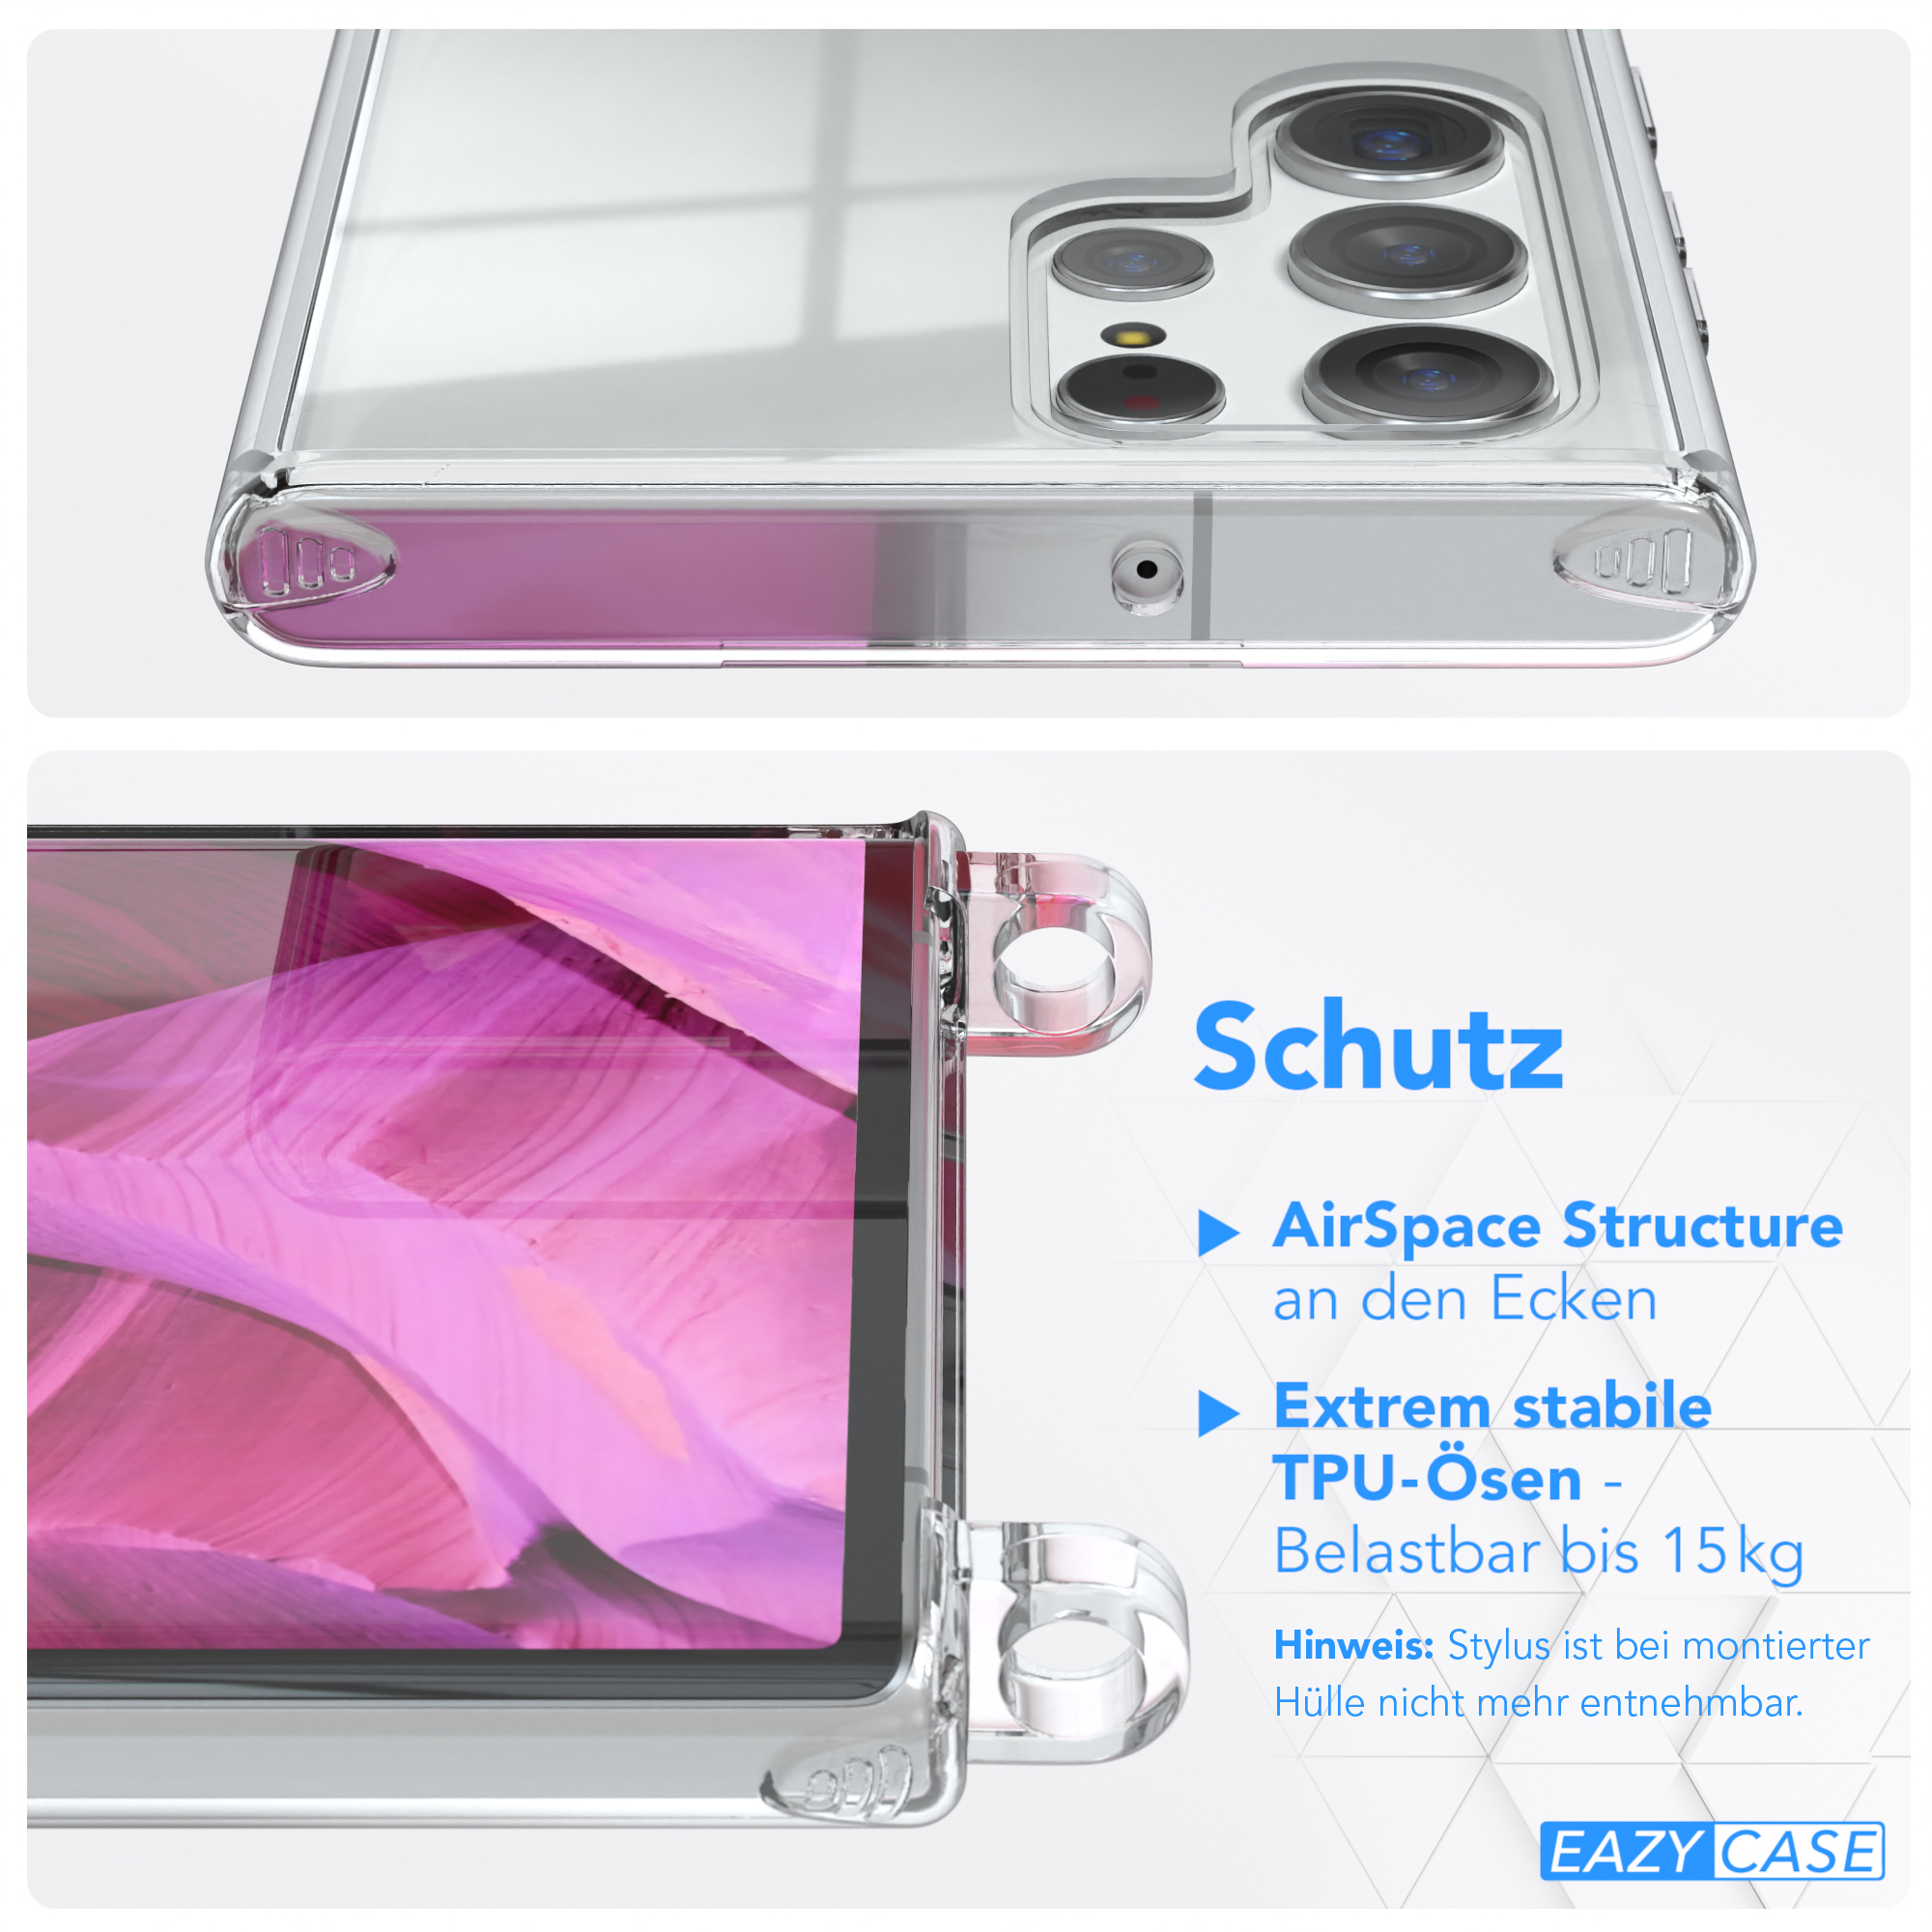 5G, / Umhängeband, Umhängetasche, S22 mit Samsung, Cover EAZY Pink CASE Ultra Clear Galaxy Clips Silber